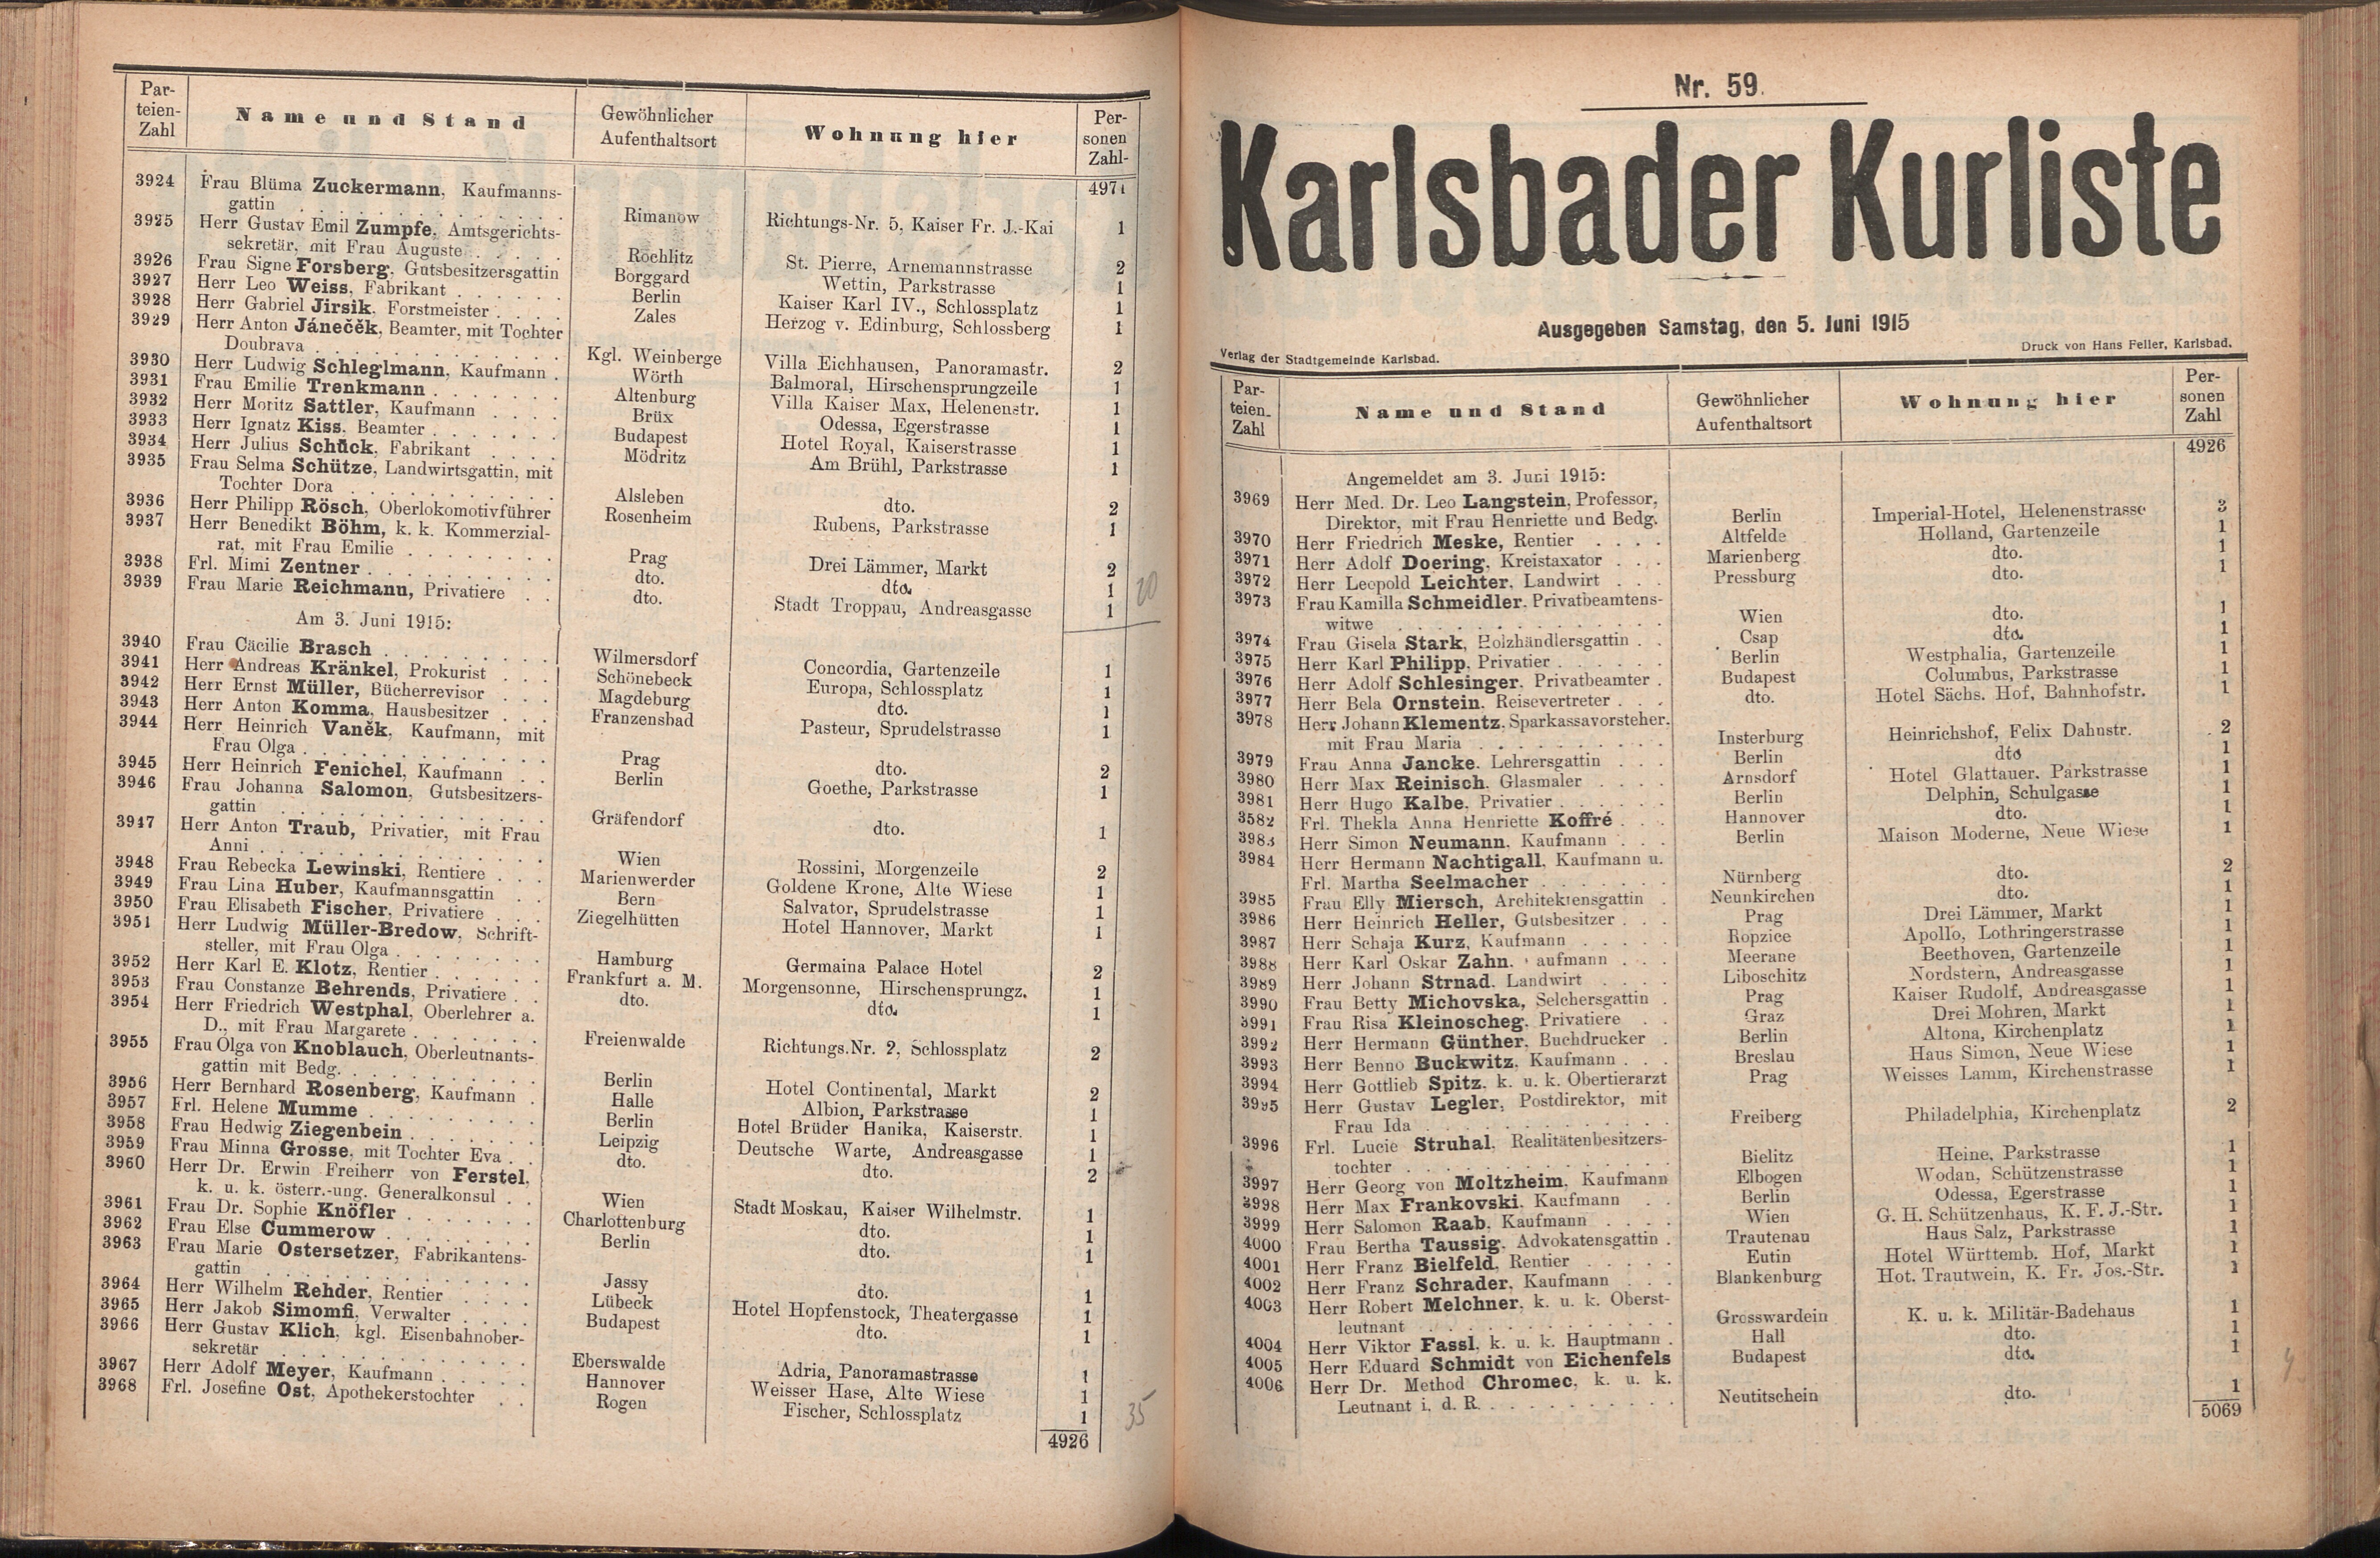 134. soap-kv_knihovna_karlsbader-kurliste-1915_1340